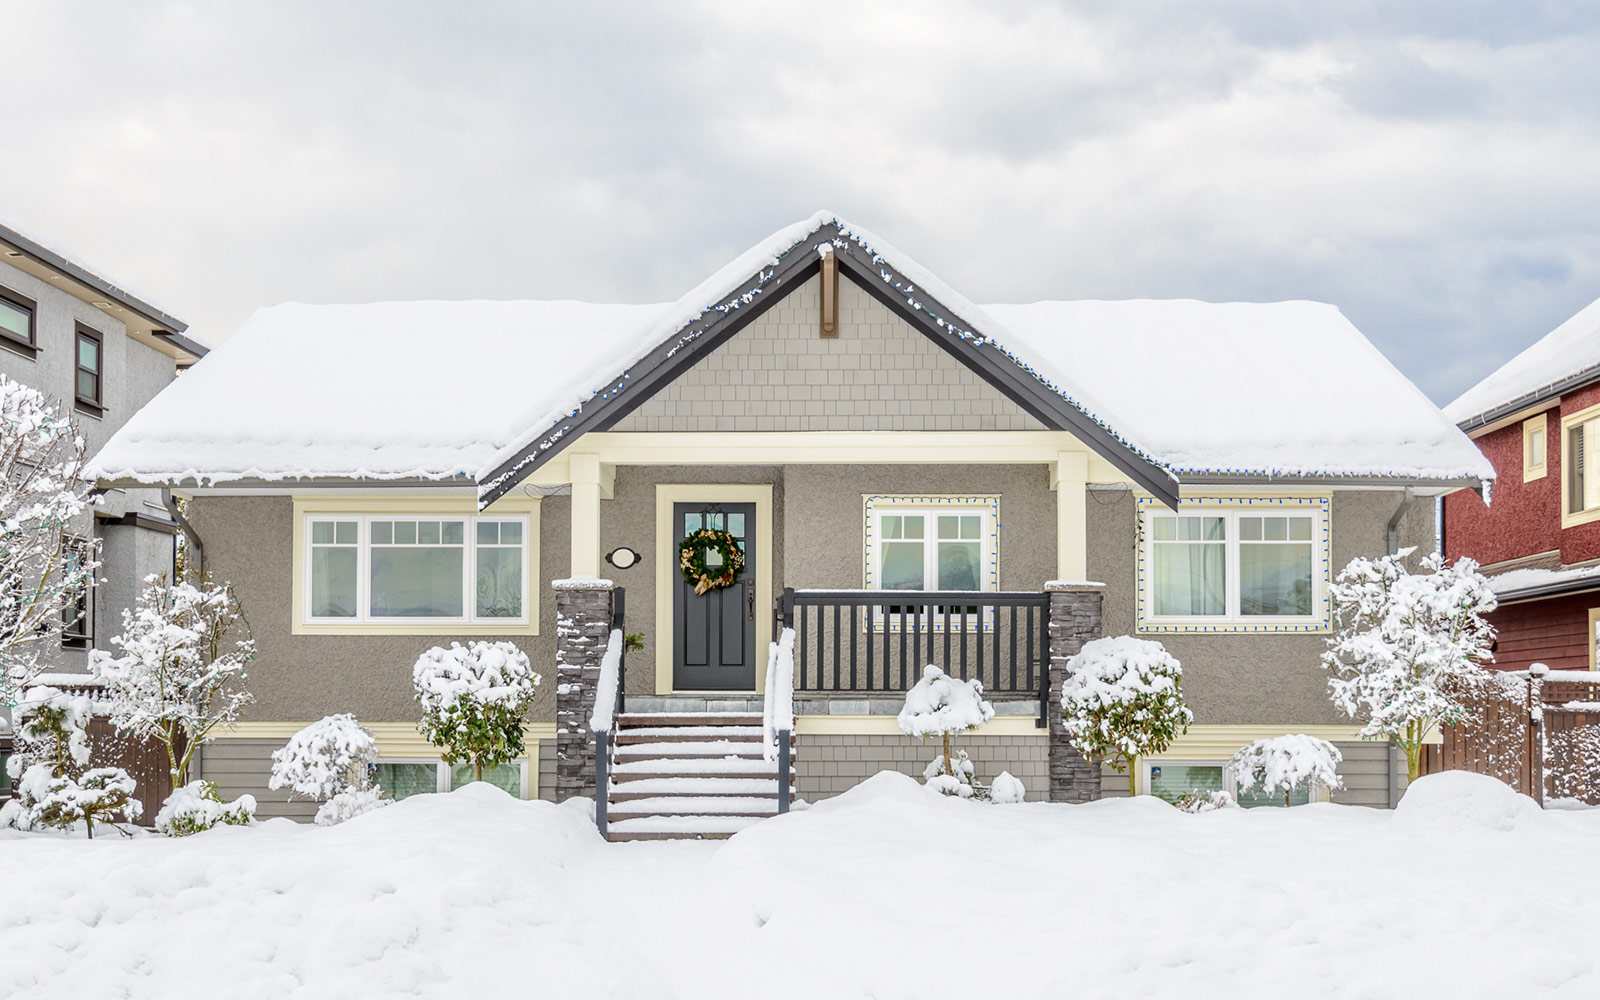 Top Ten Tips for Home Winterization